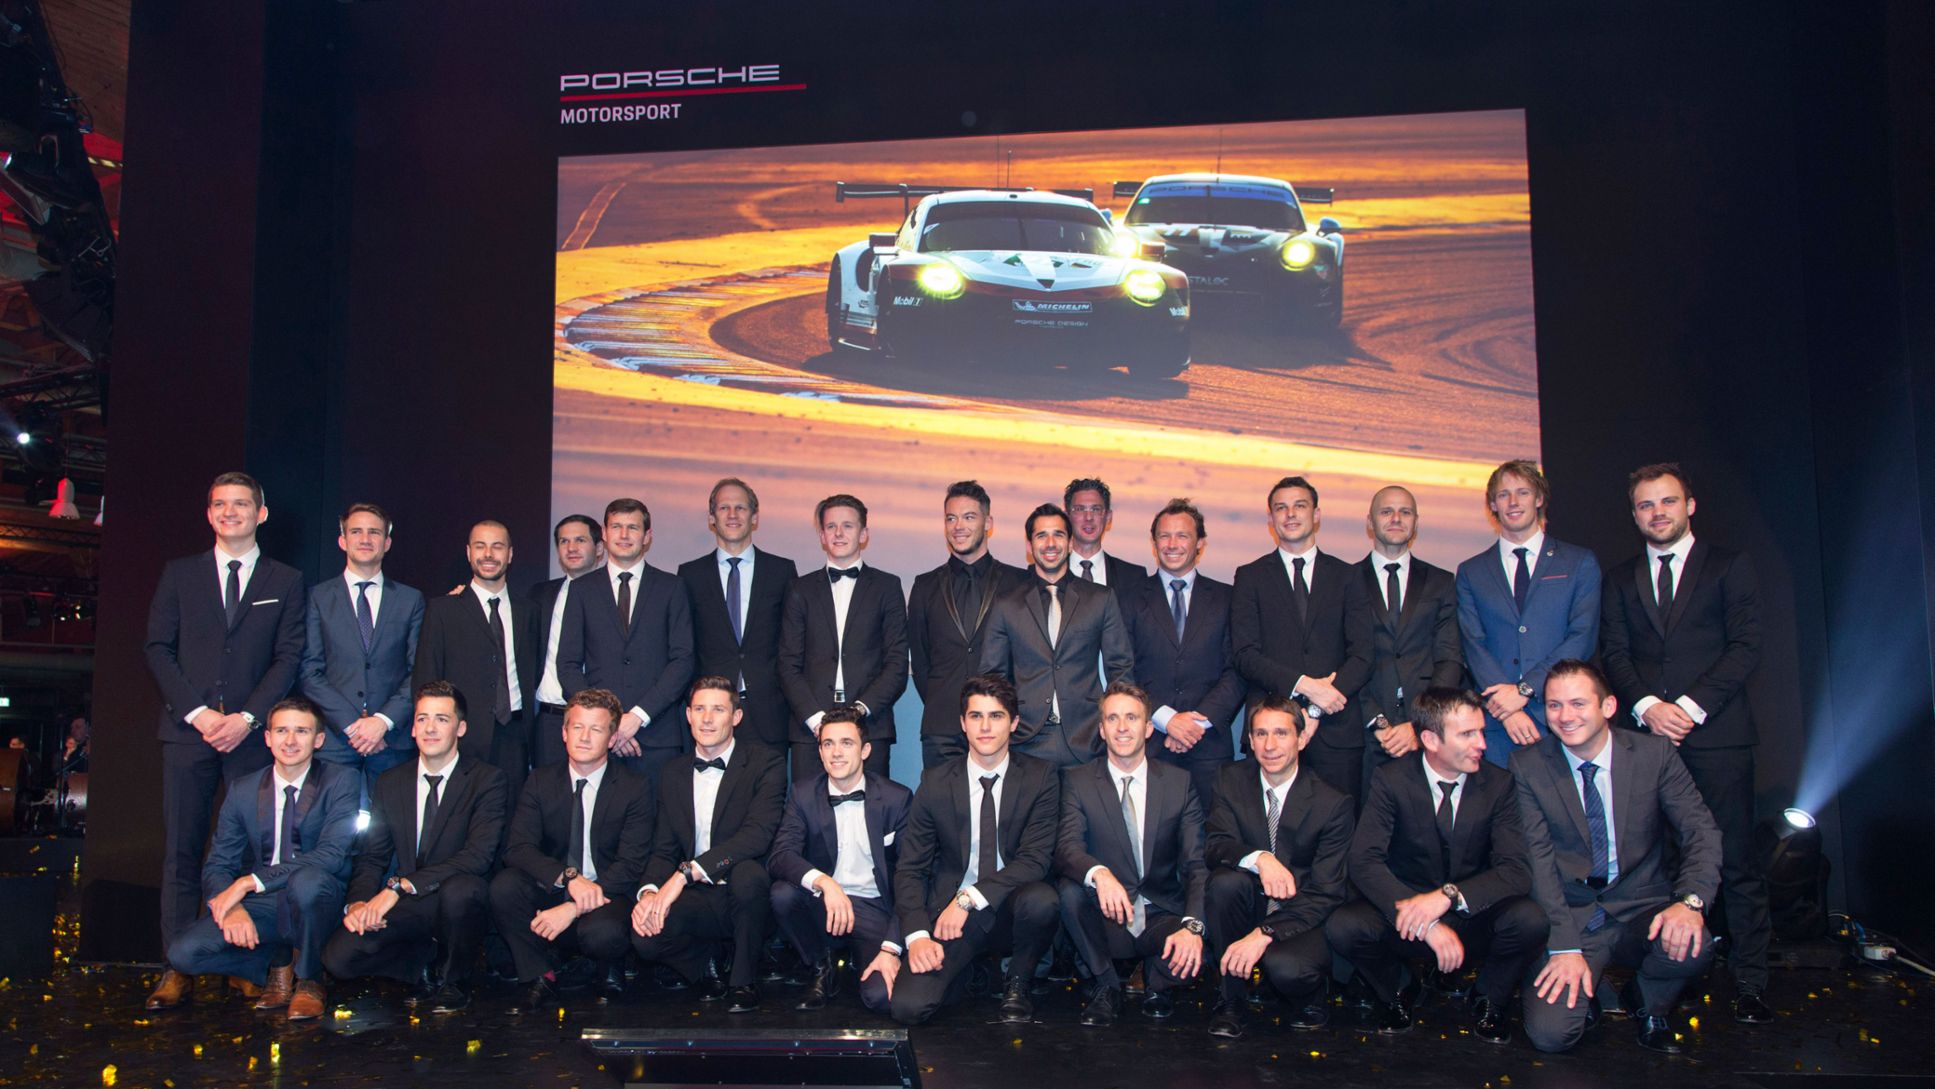 Porsche Night of Champions, Weissach, 12/09/2017, Porsche AG